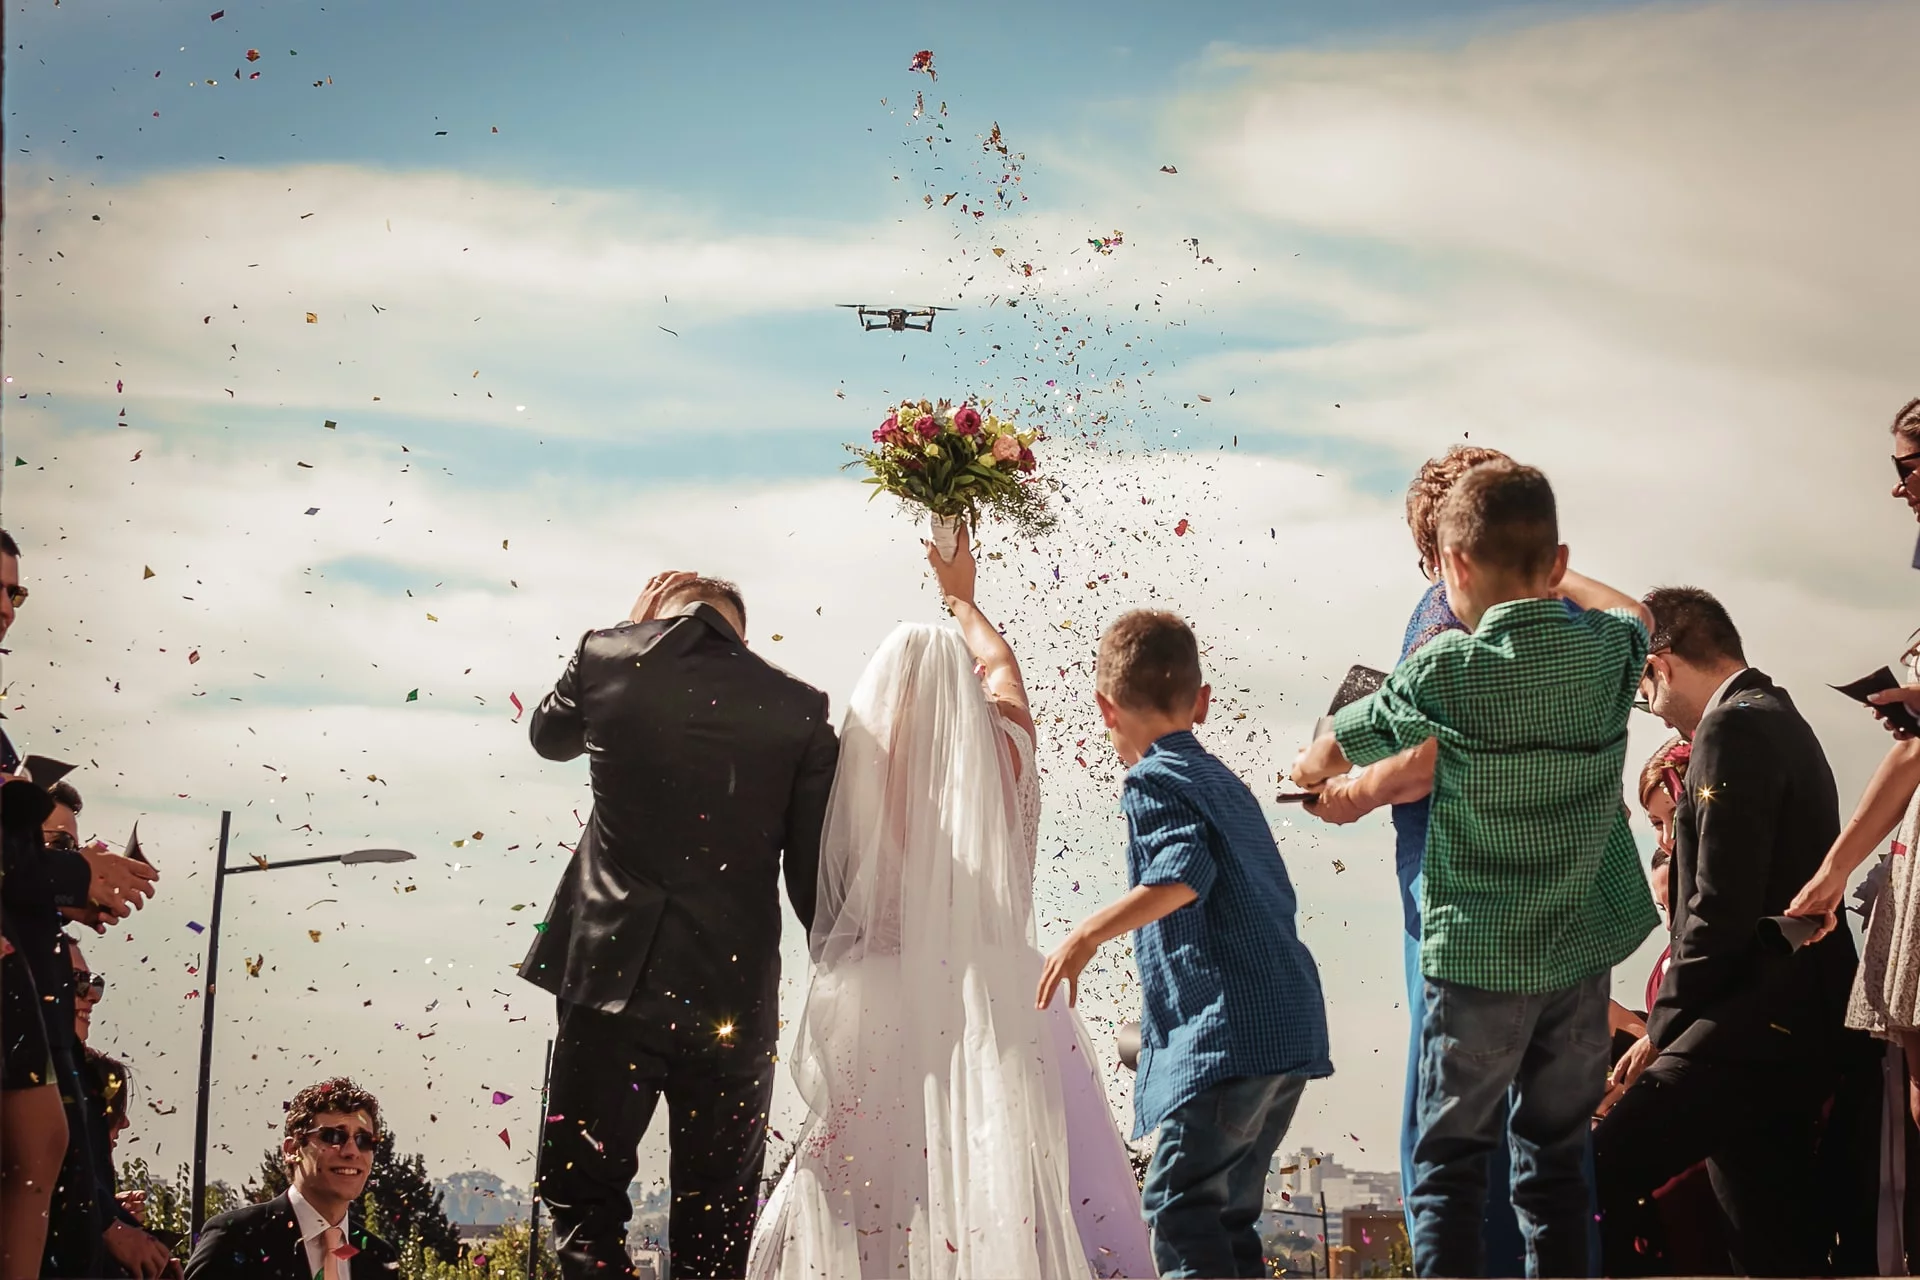 Church Wedding Vs Civil Wedding Ceremony - Wedinspire